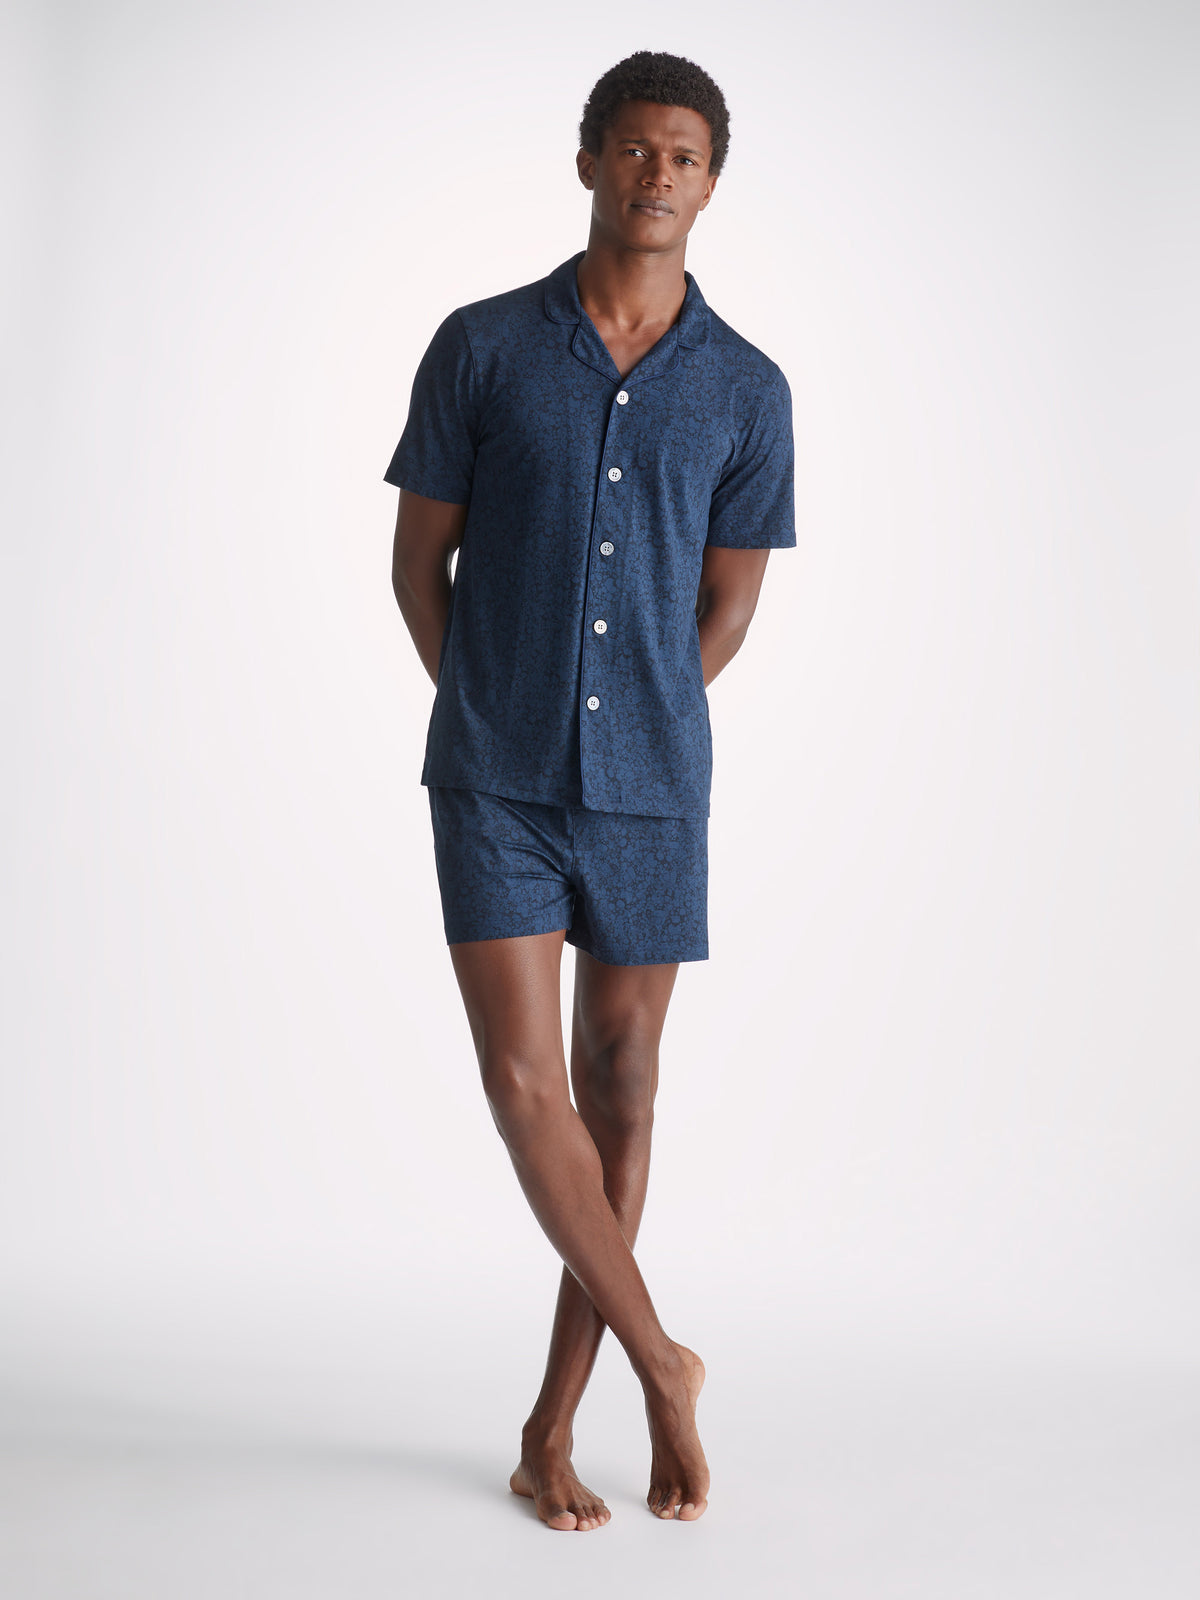 Men's Short Pyjamas London 10 Micro Modal Navy